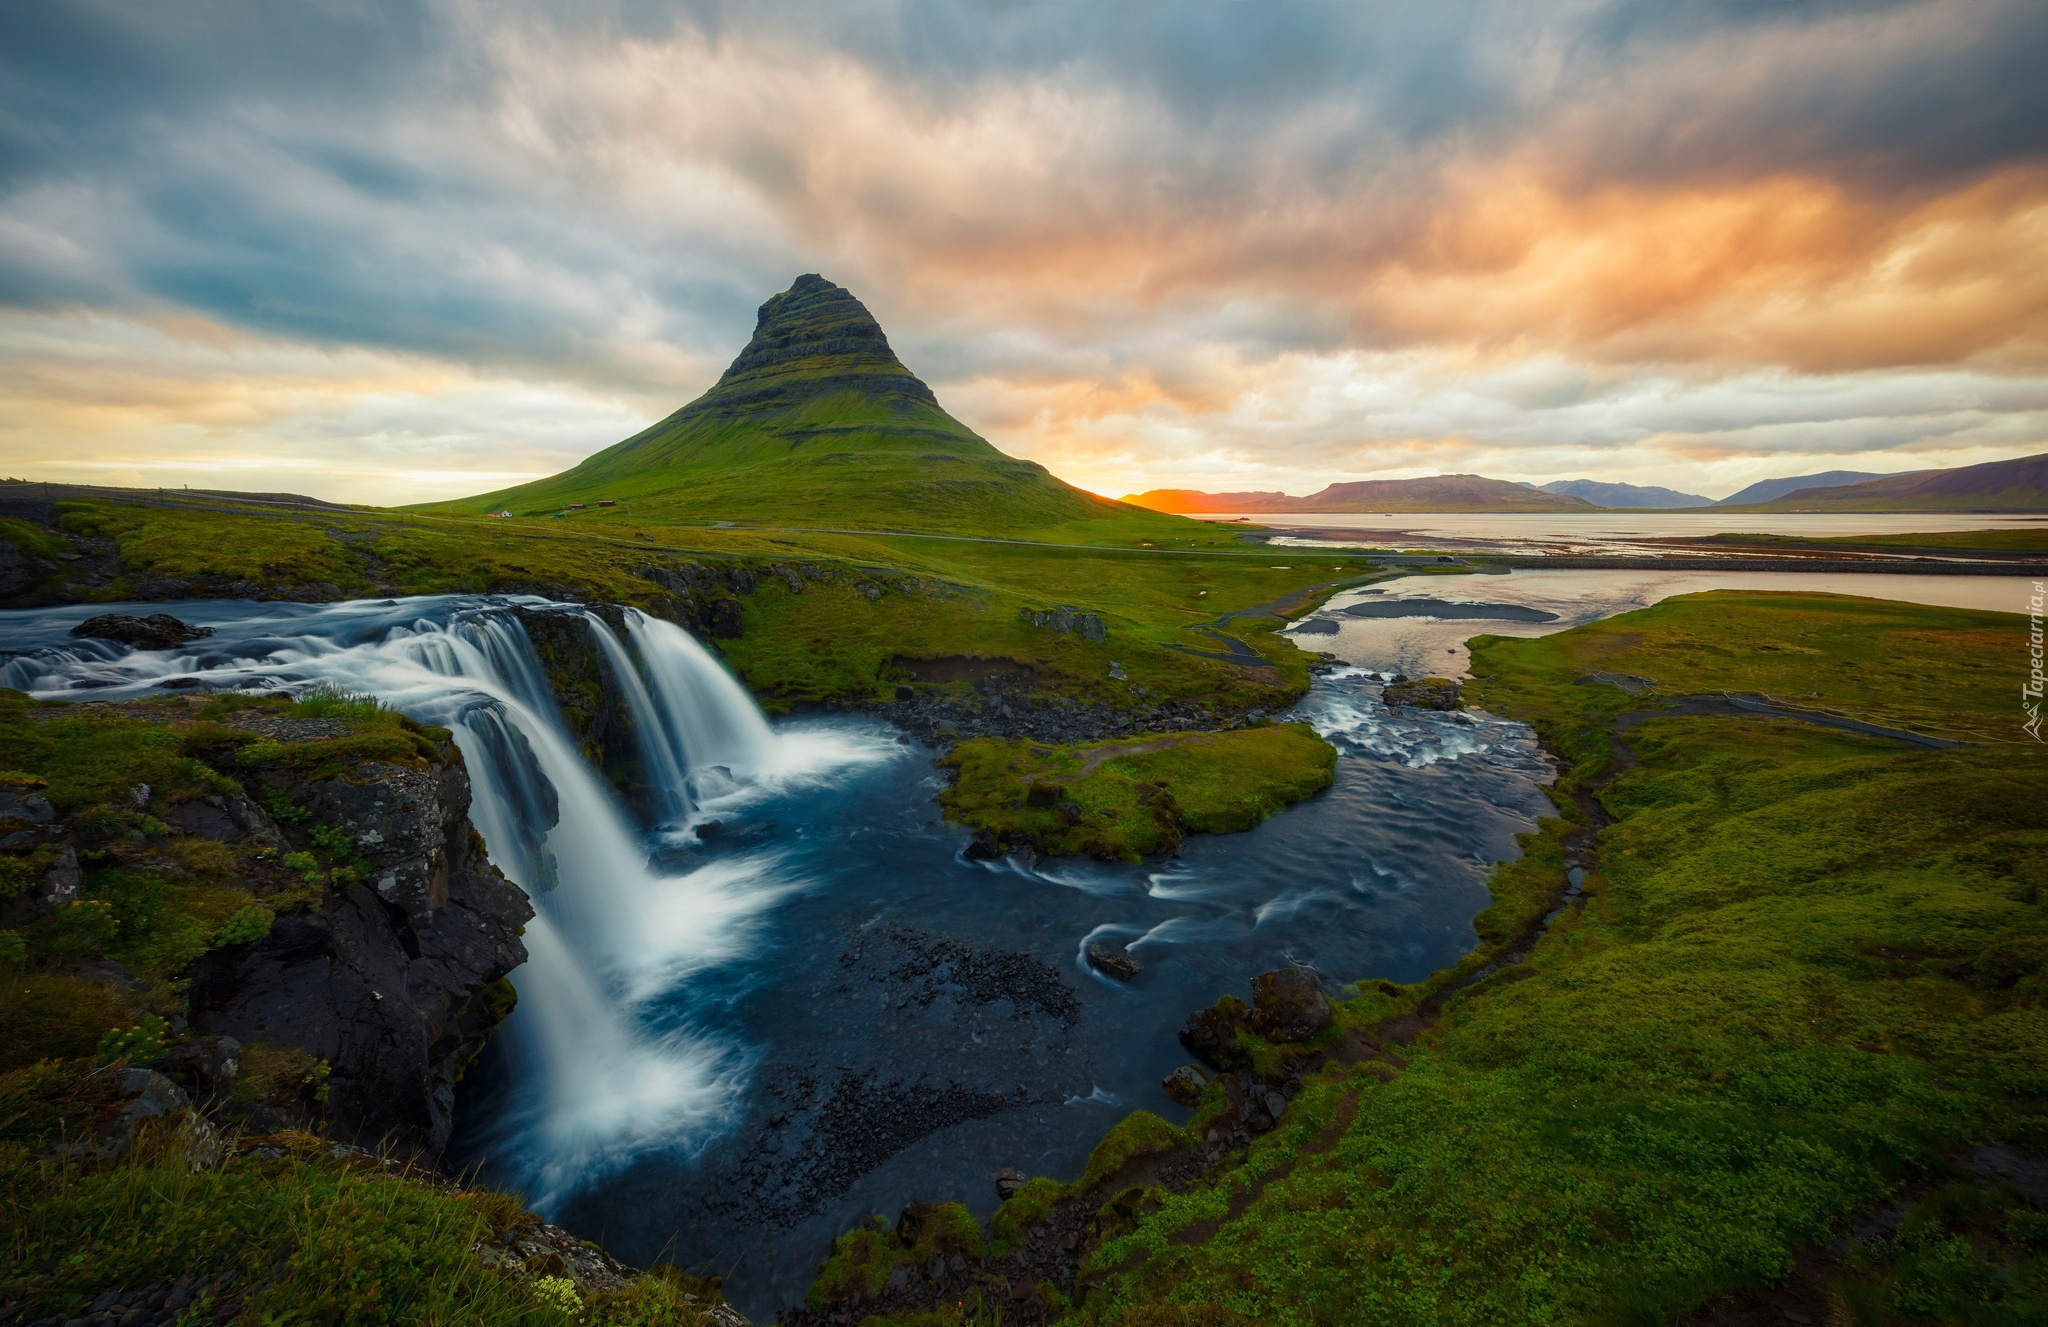  Islandia, Półwysep Snaefellsnes, Wodospad Kirkjufellsfoss, Góra Kirkjufell, Chmury